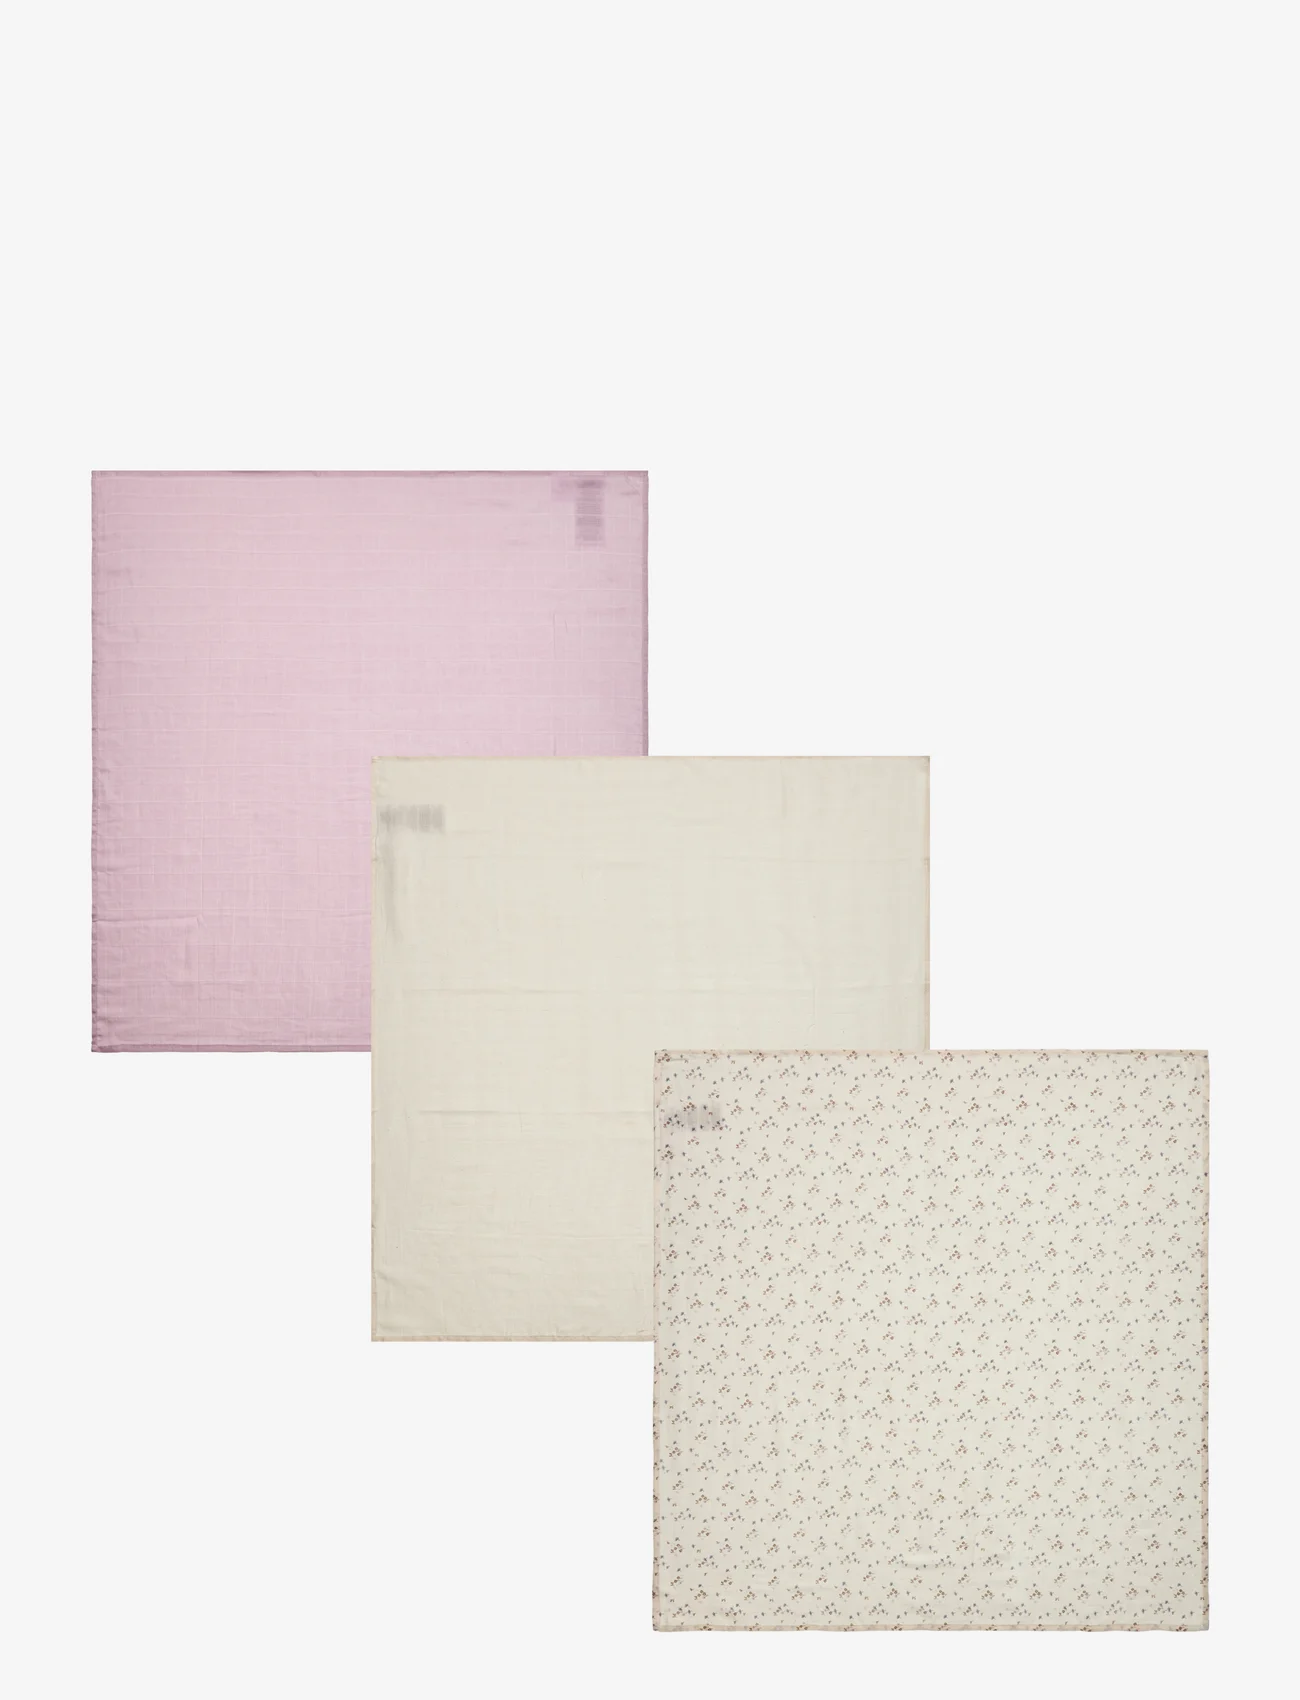 Pippi - Organic Muslin Cloth (3-pack) - harsot - burnished lilac - 0